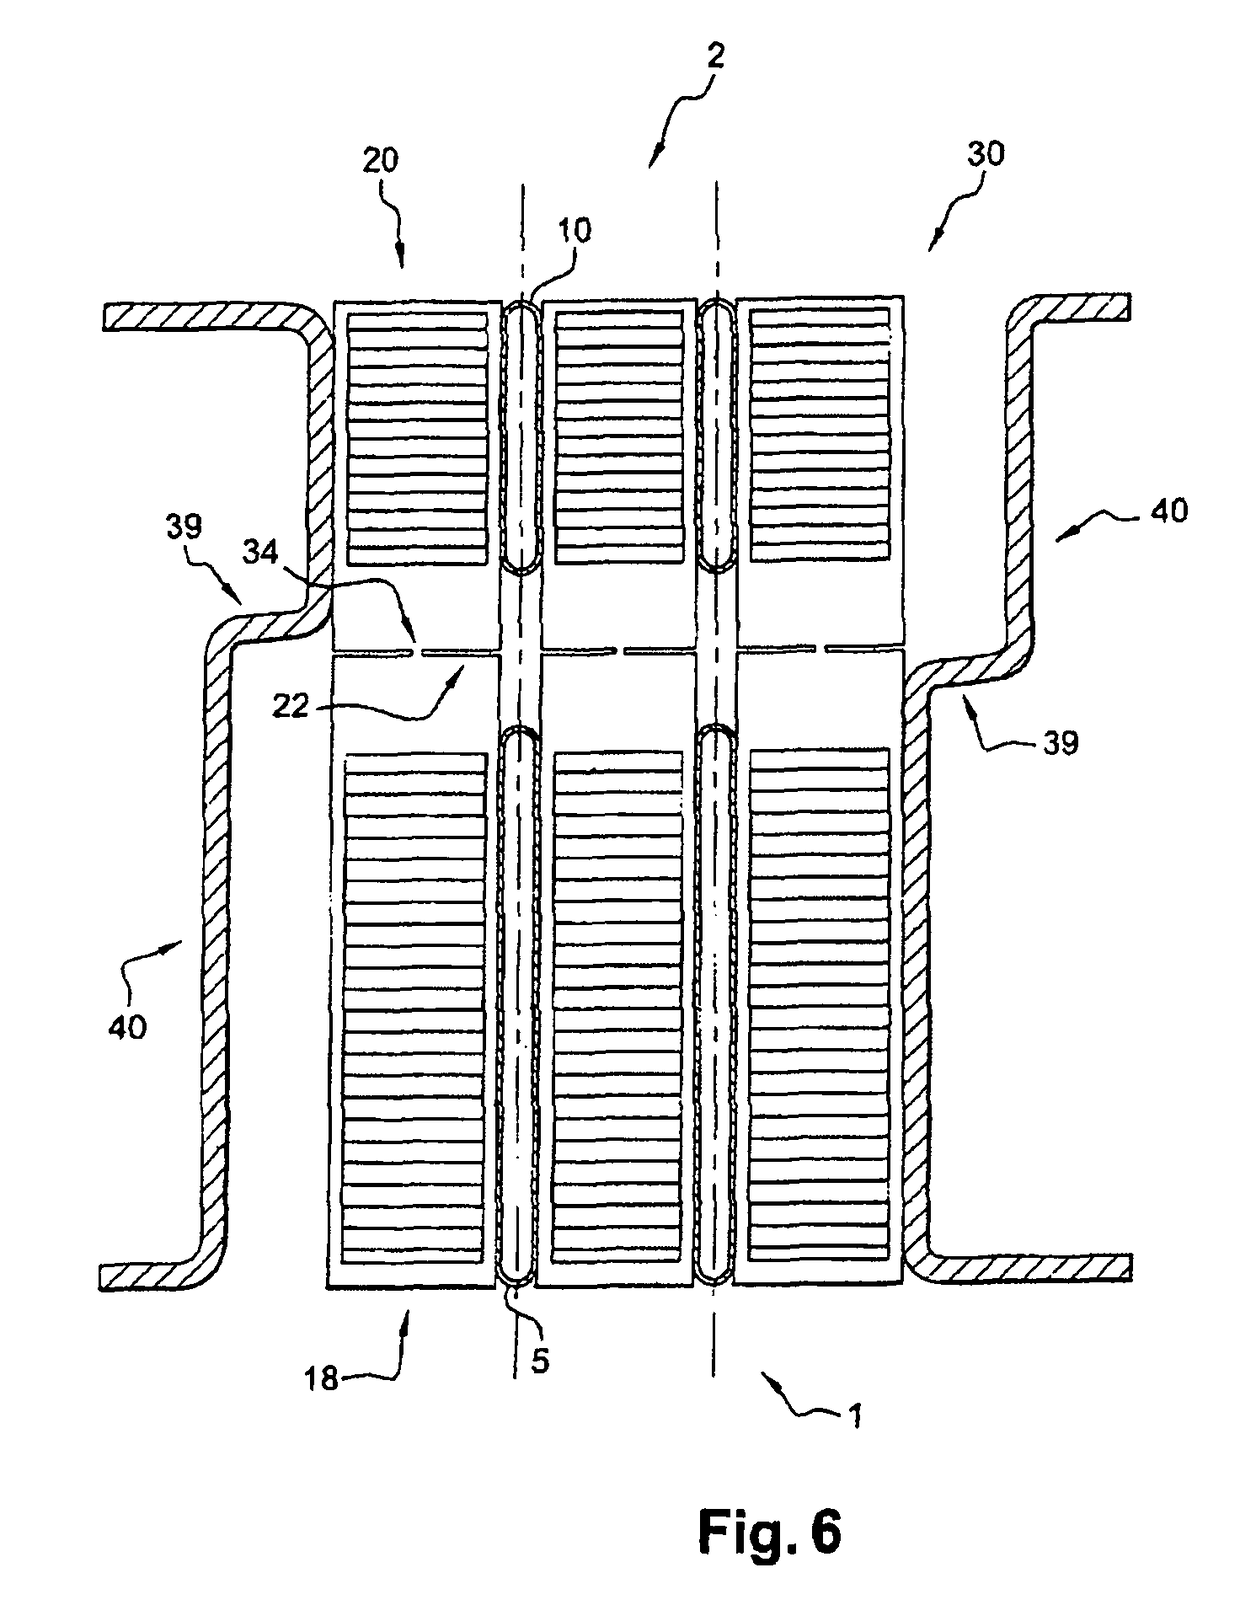 Method of producing a heat exchanger module